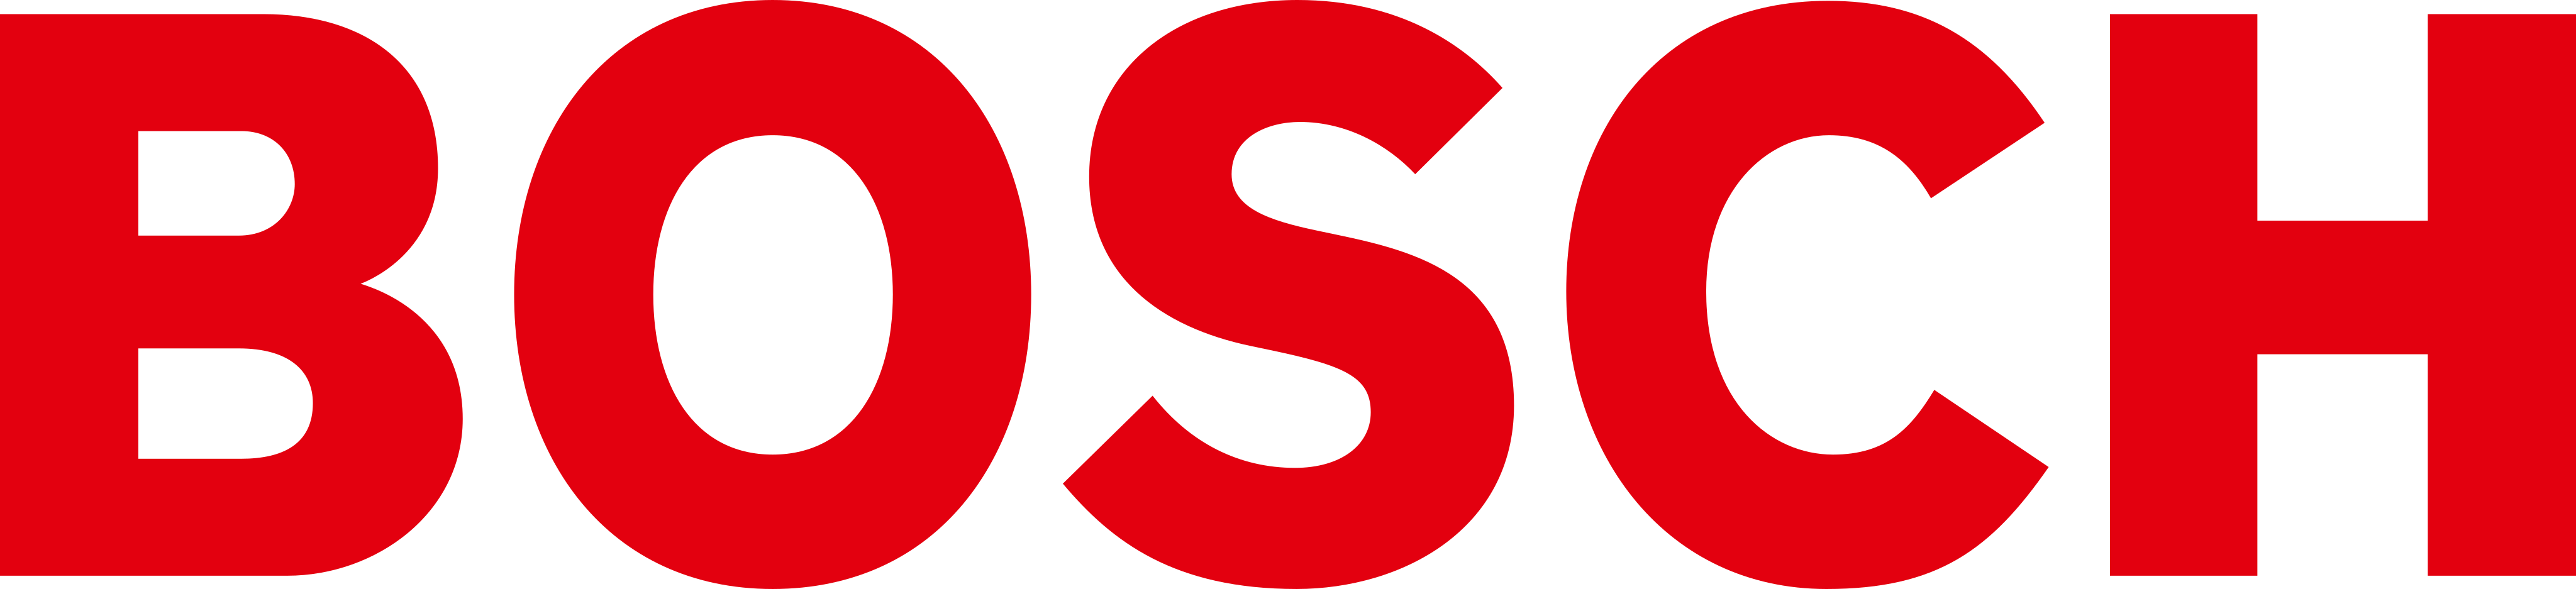 bosch logo 1 1 - Bosch Logo